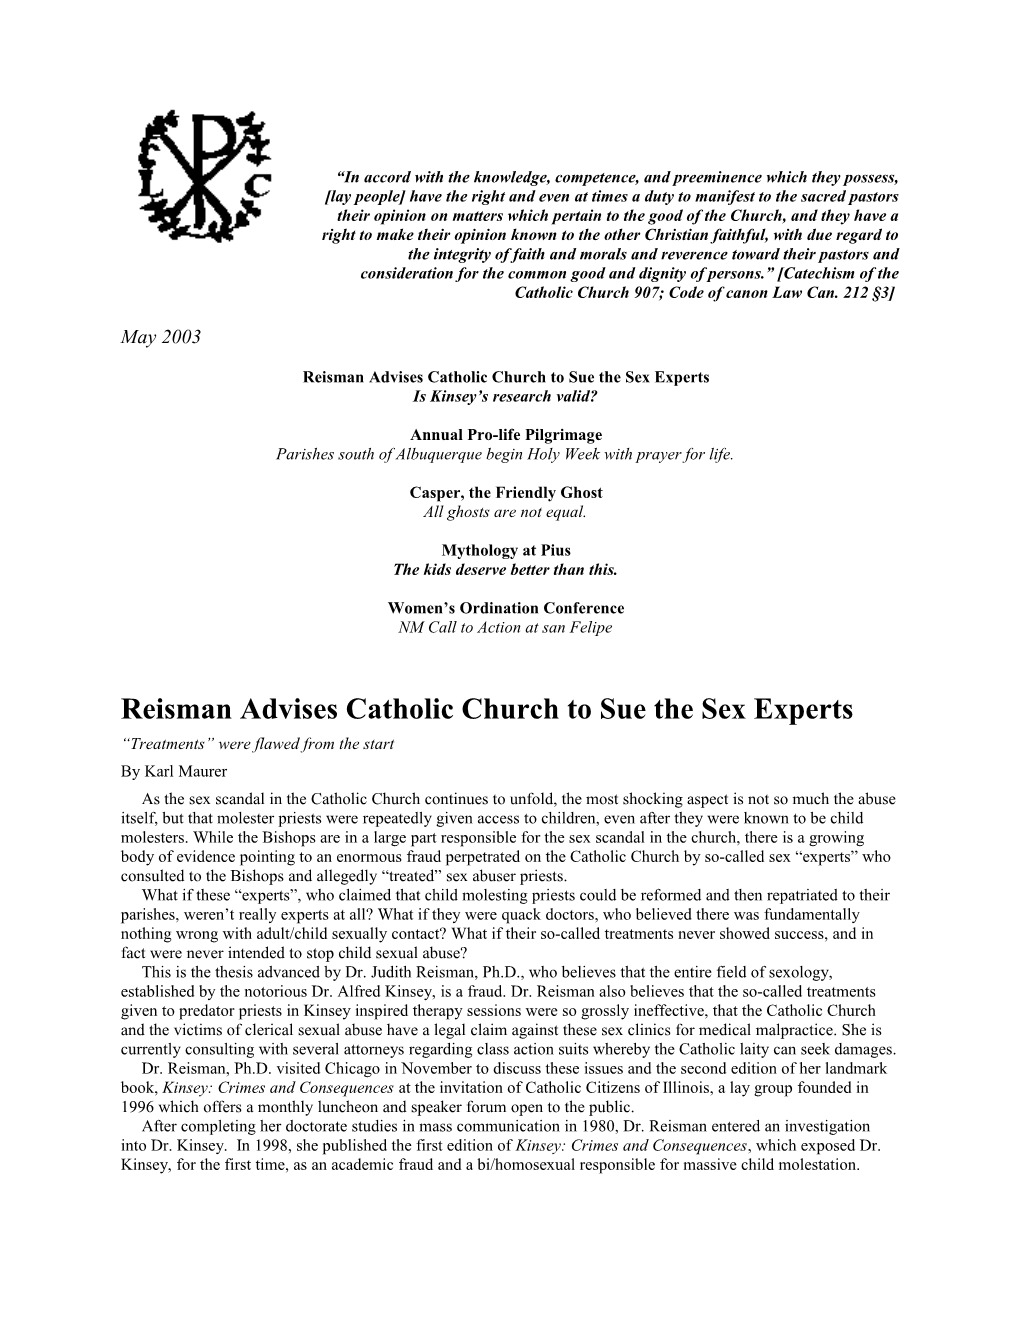 Reisman Advises Catholic Church to Sue the Sex Experts